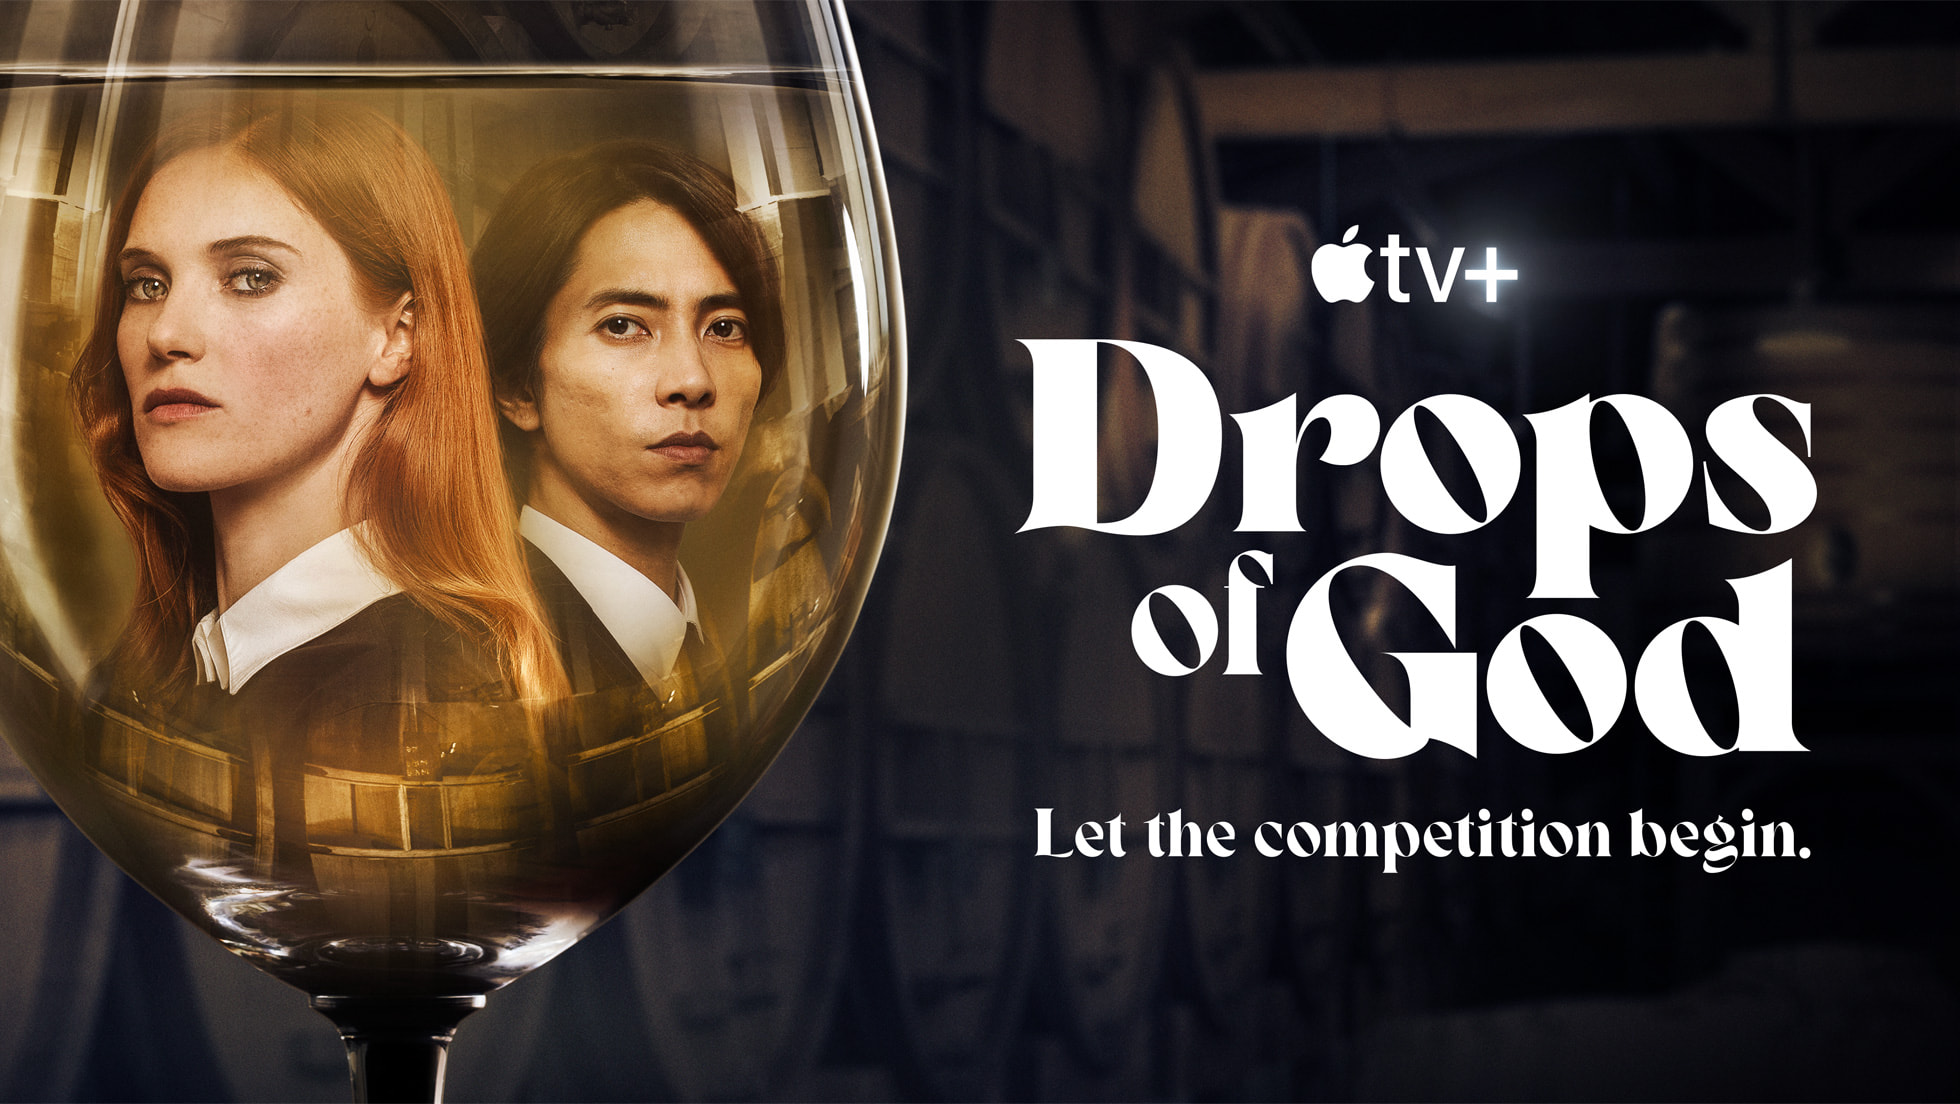 Apple TV+ announces season two of hit drama “Drops of God” starring